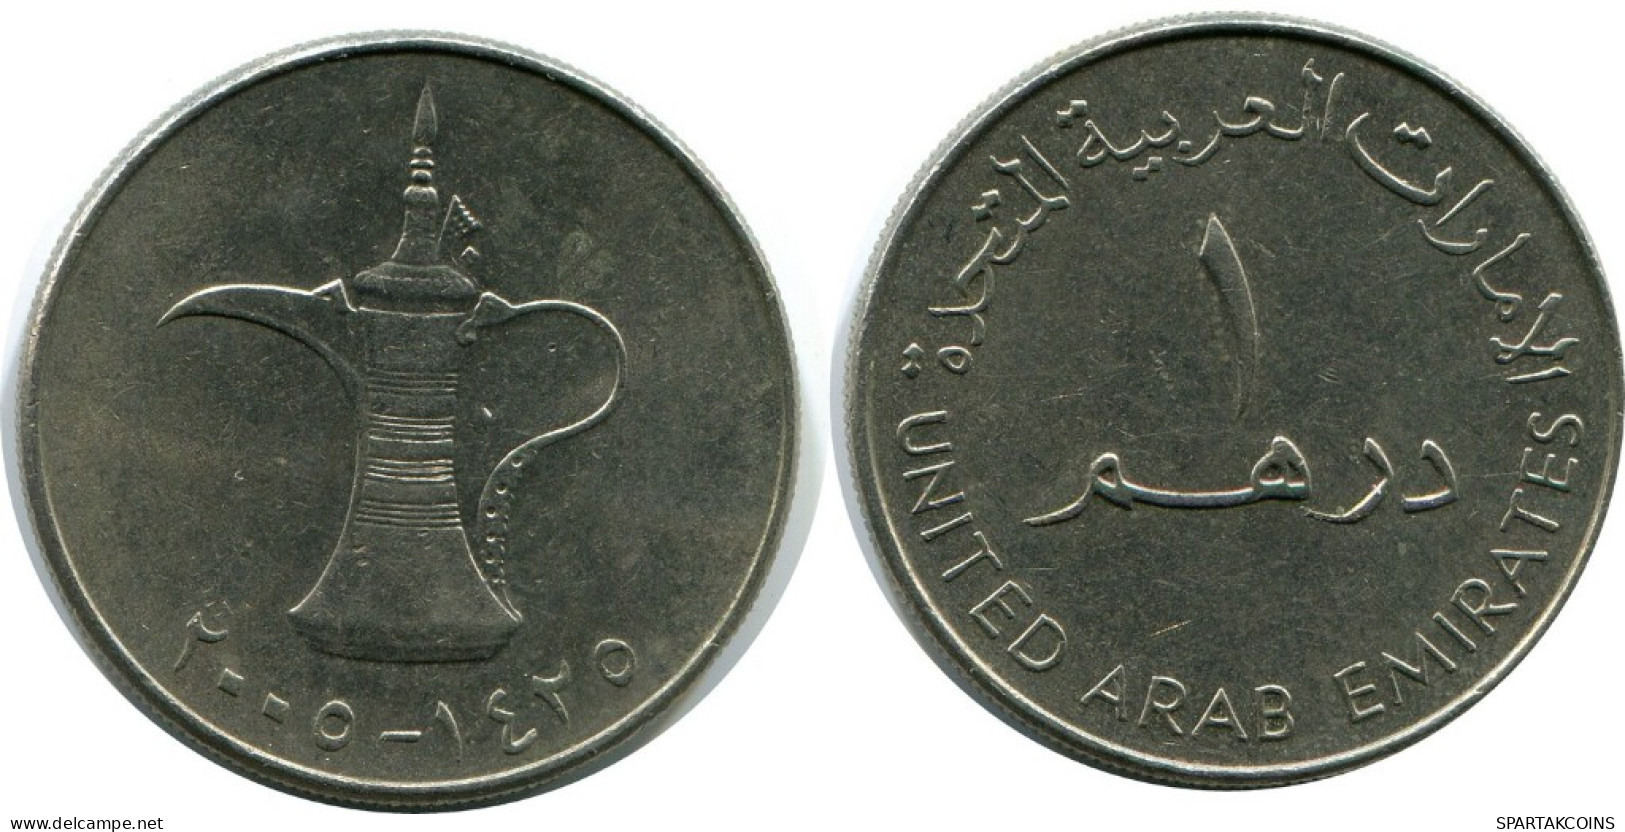 1 DIRHAM 2000 UAE UNITED ARAB EMIRATES Islamic Coin #AH998.U.A - Ver. Arab. Emirate